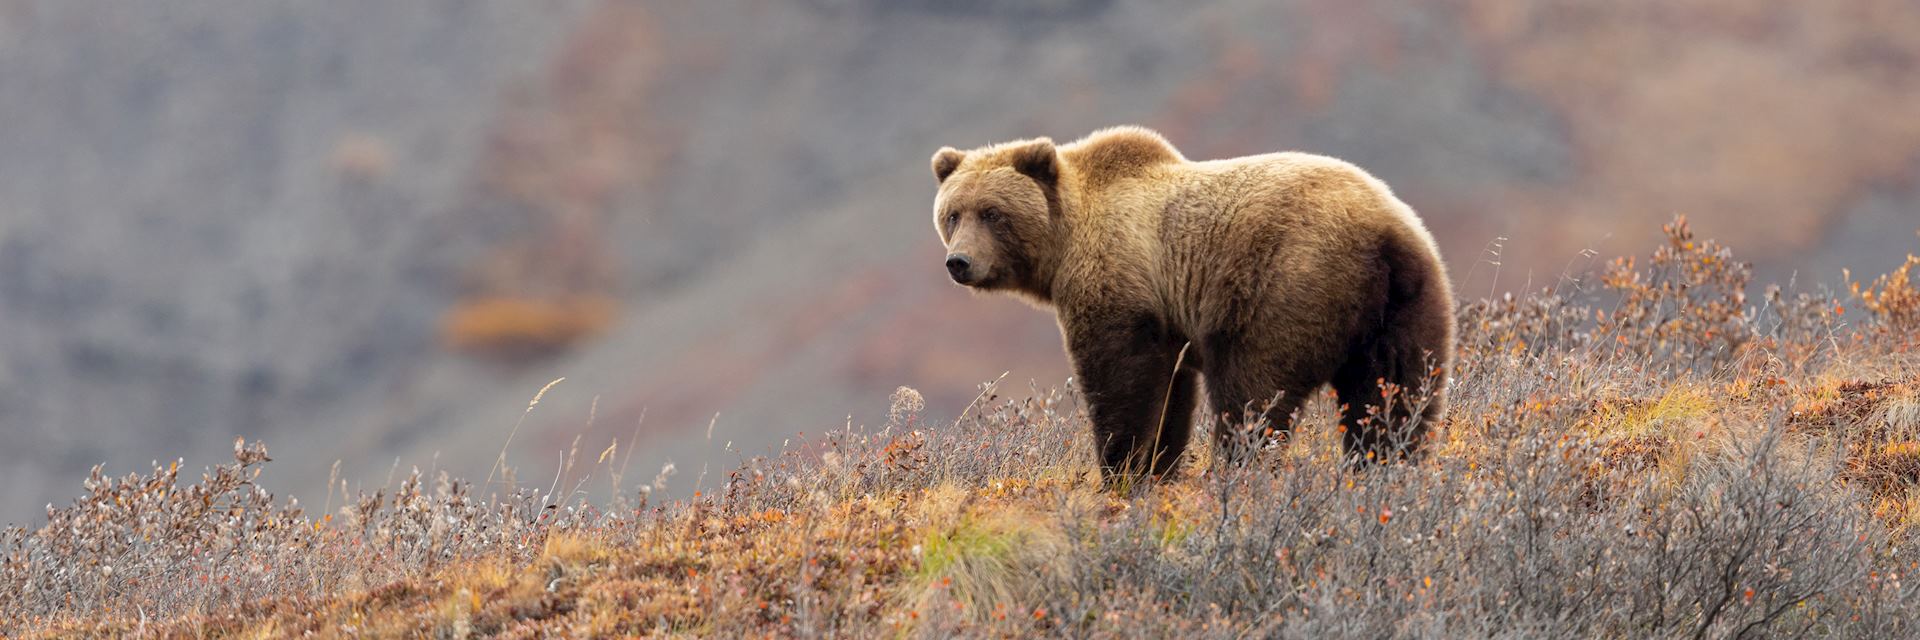 Grizzly bear, Denali National Park